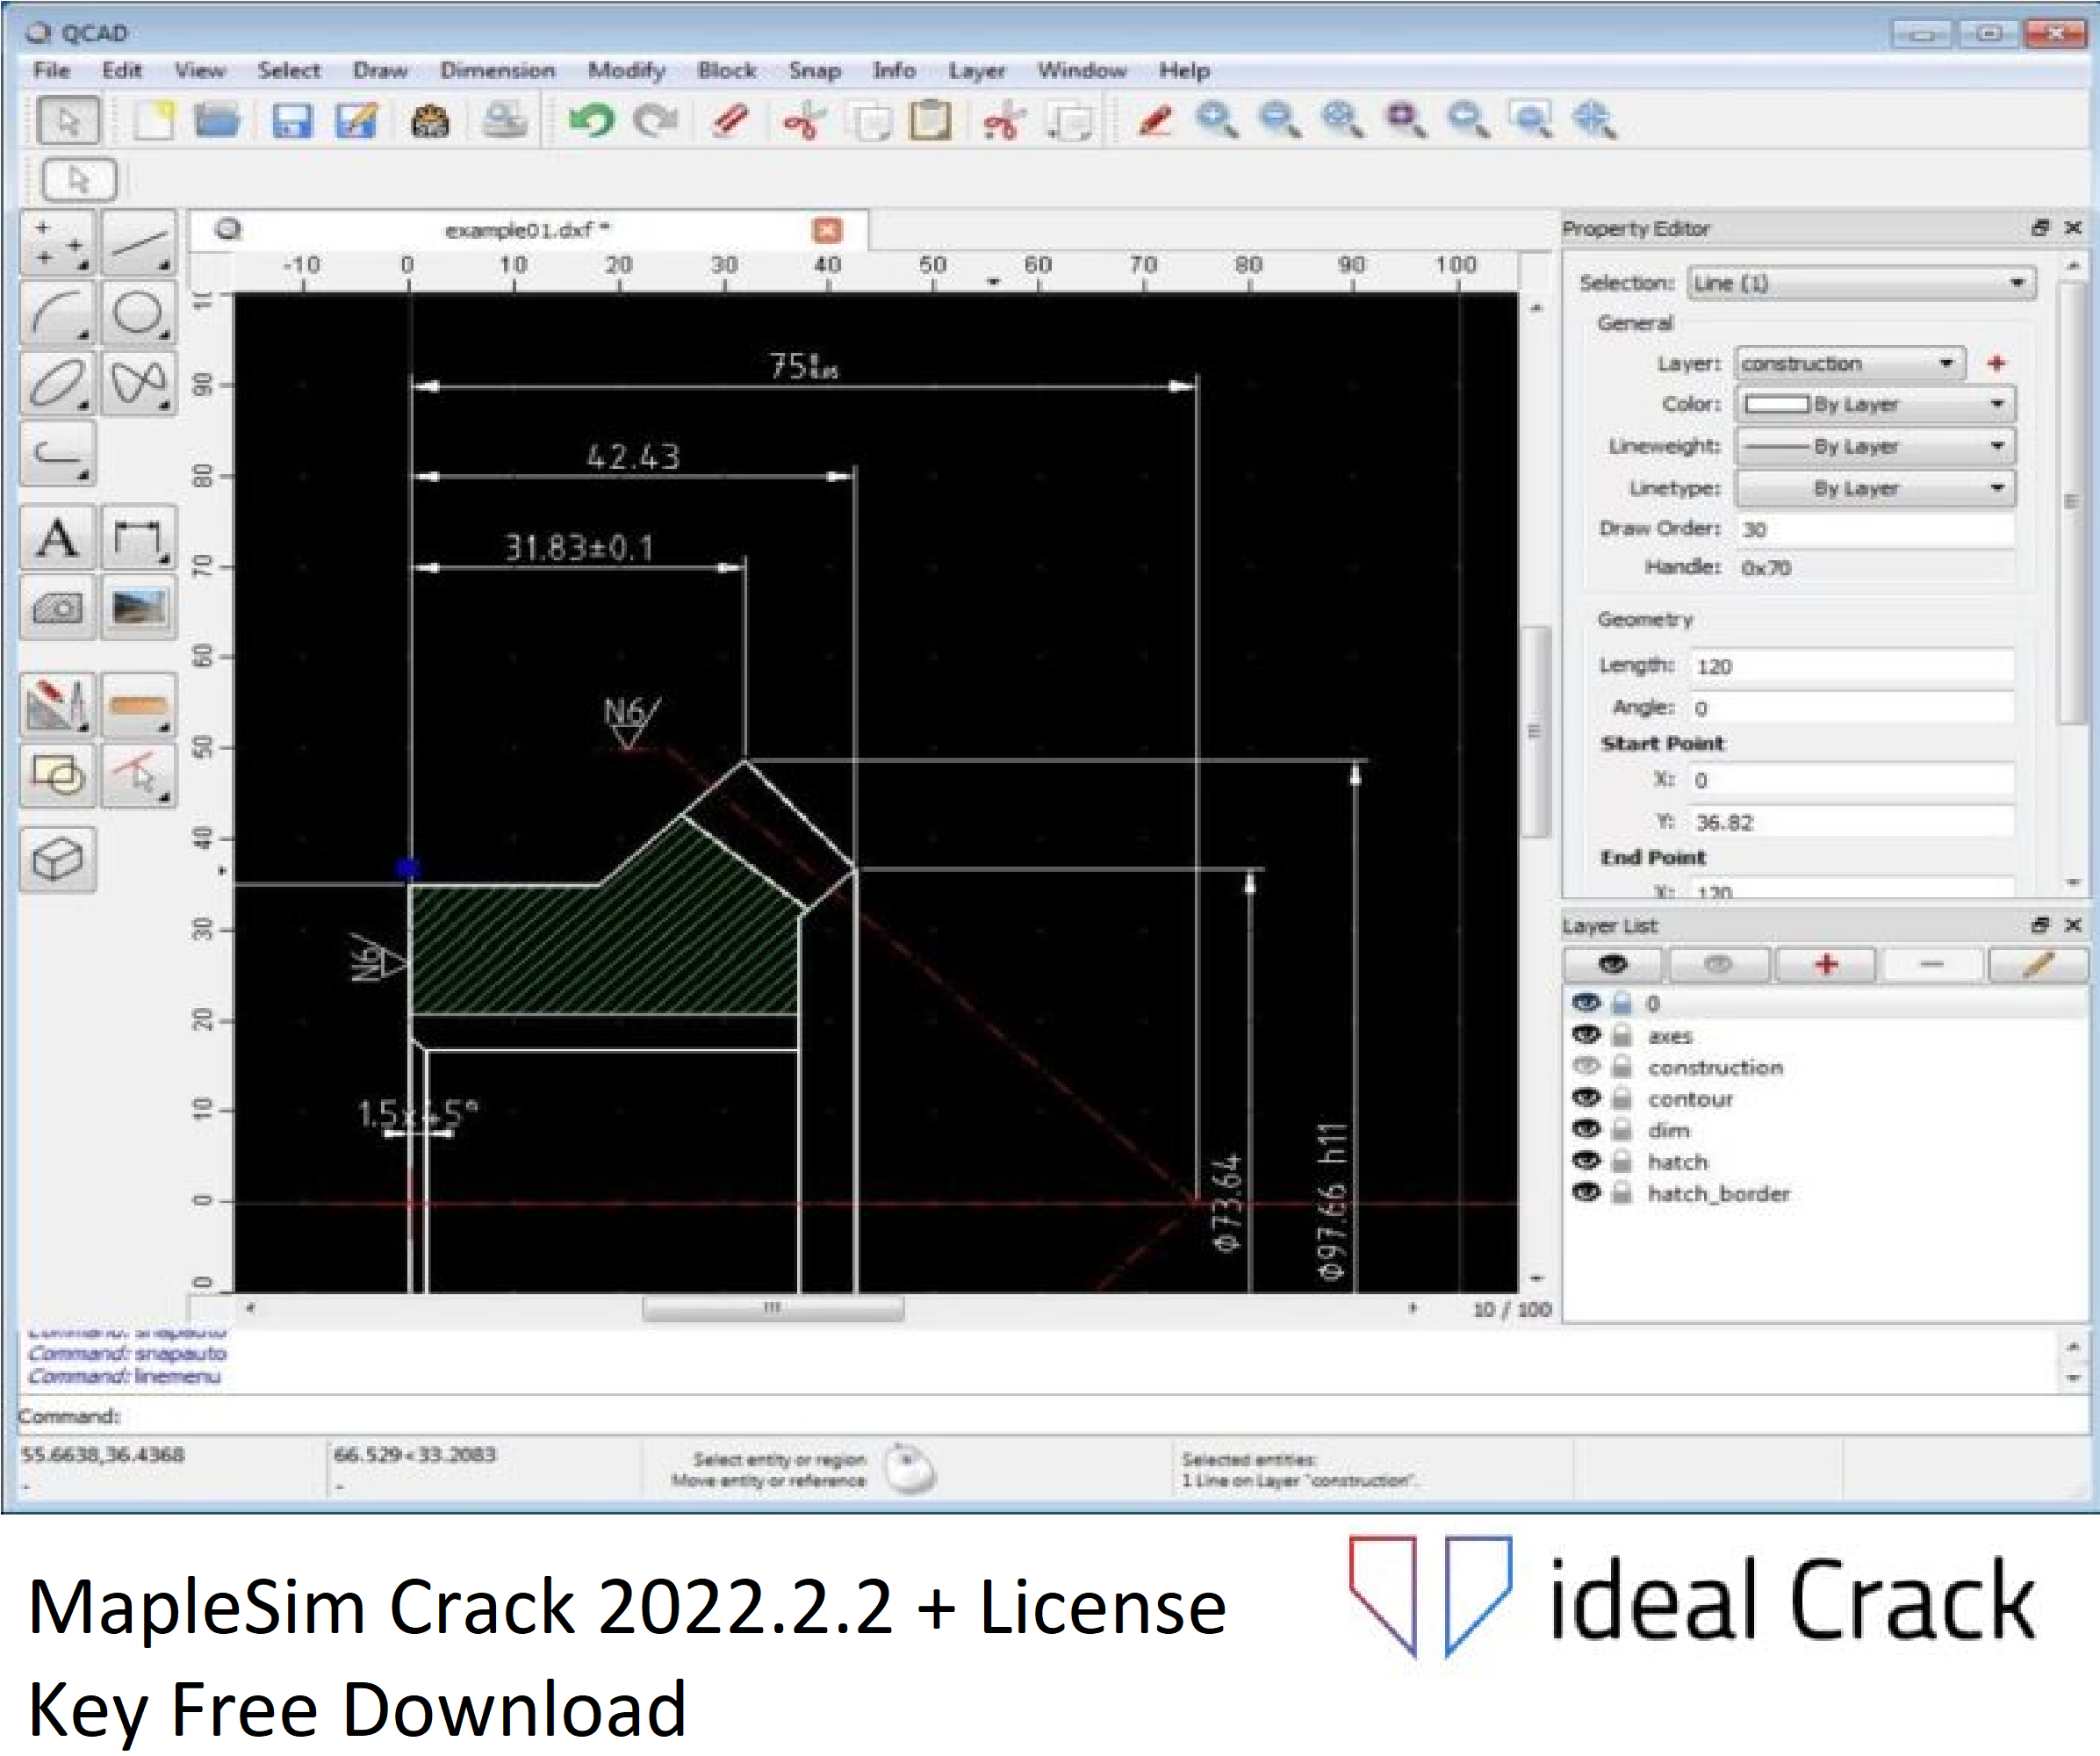 MapleSim Crack 2022.2.2 + License Key Free Download